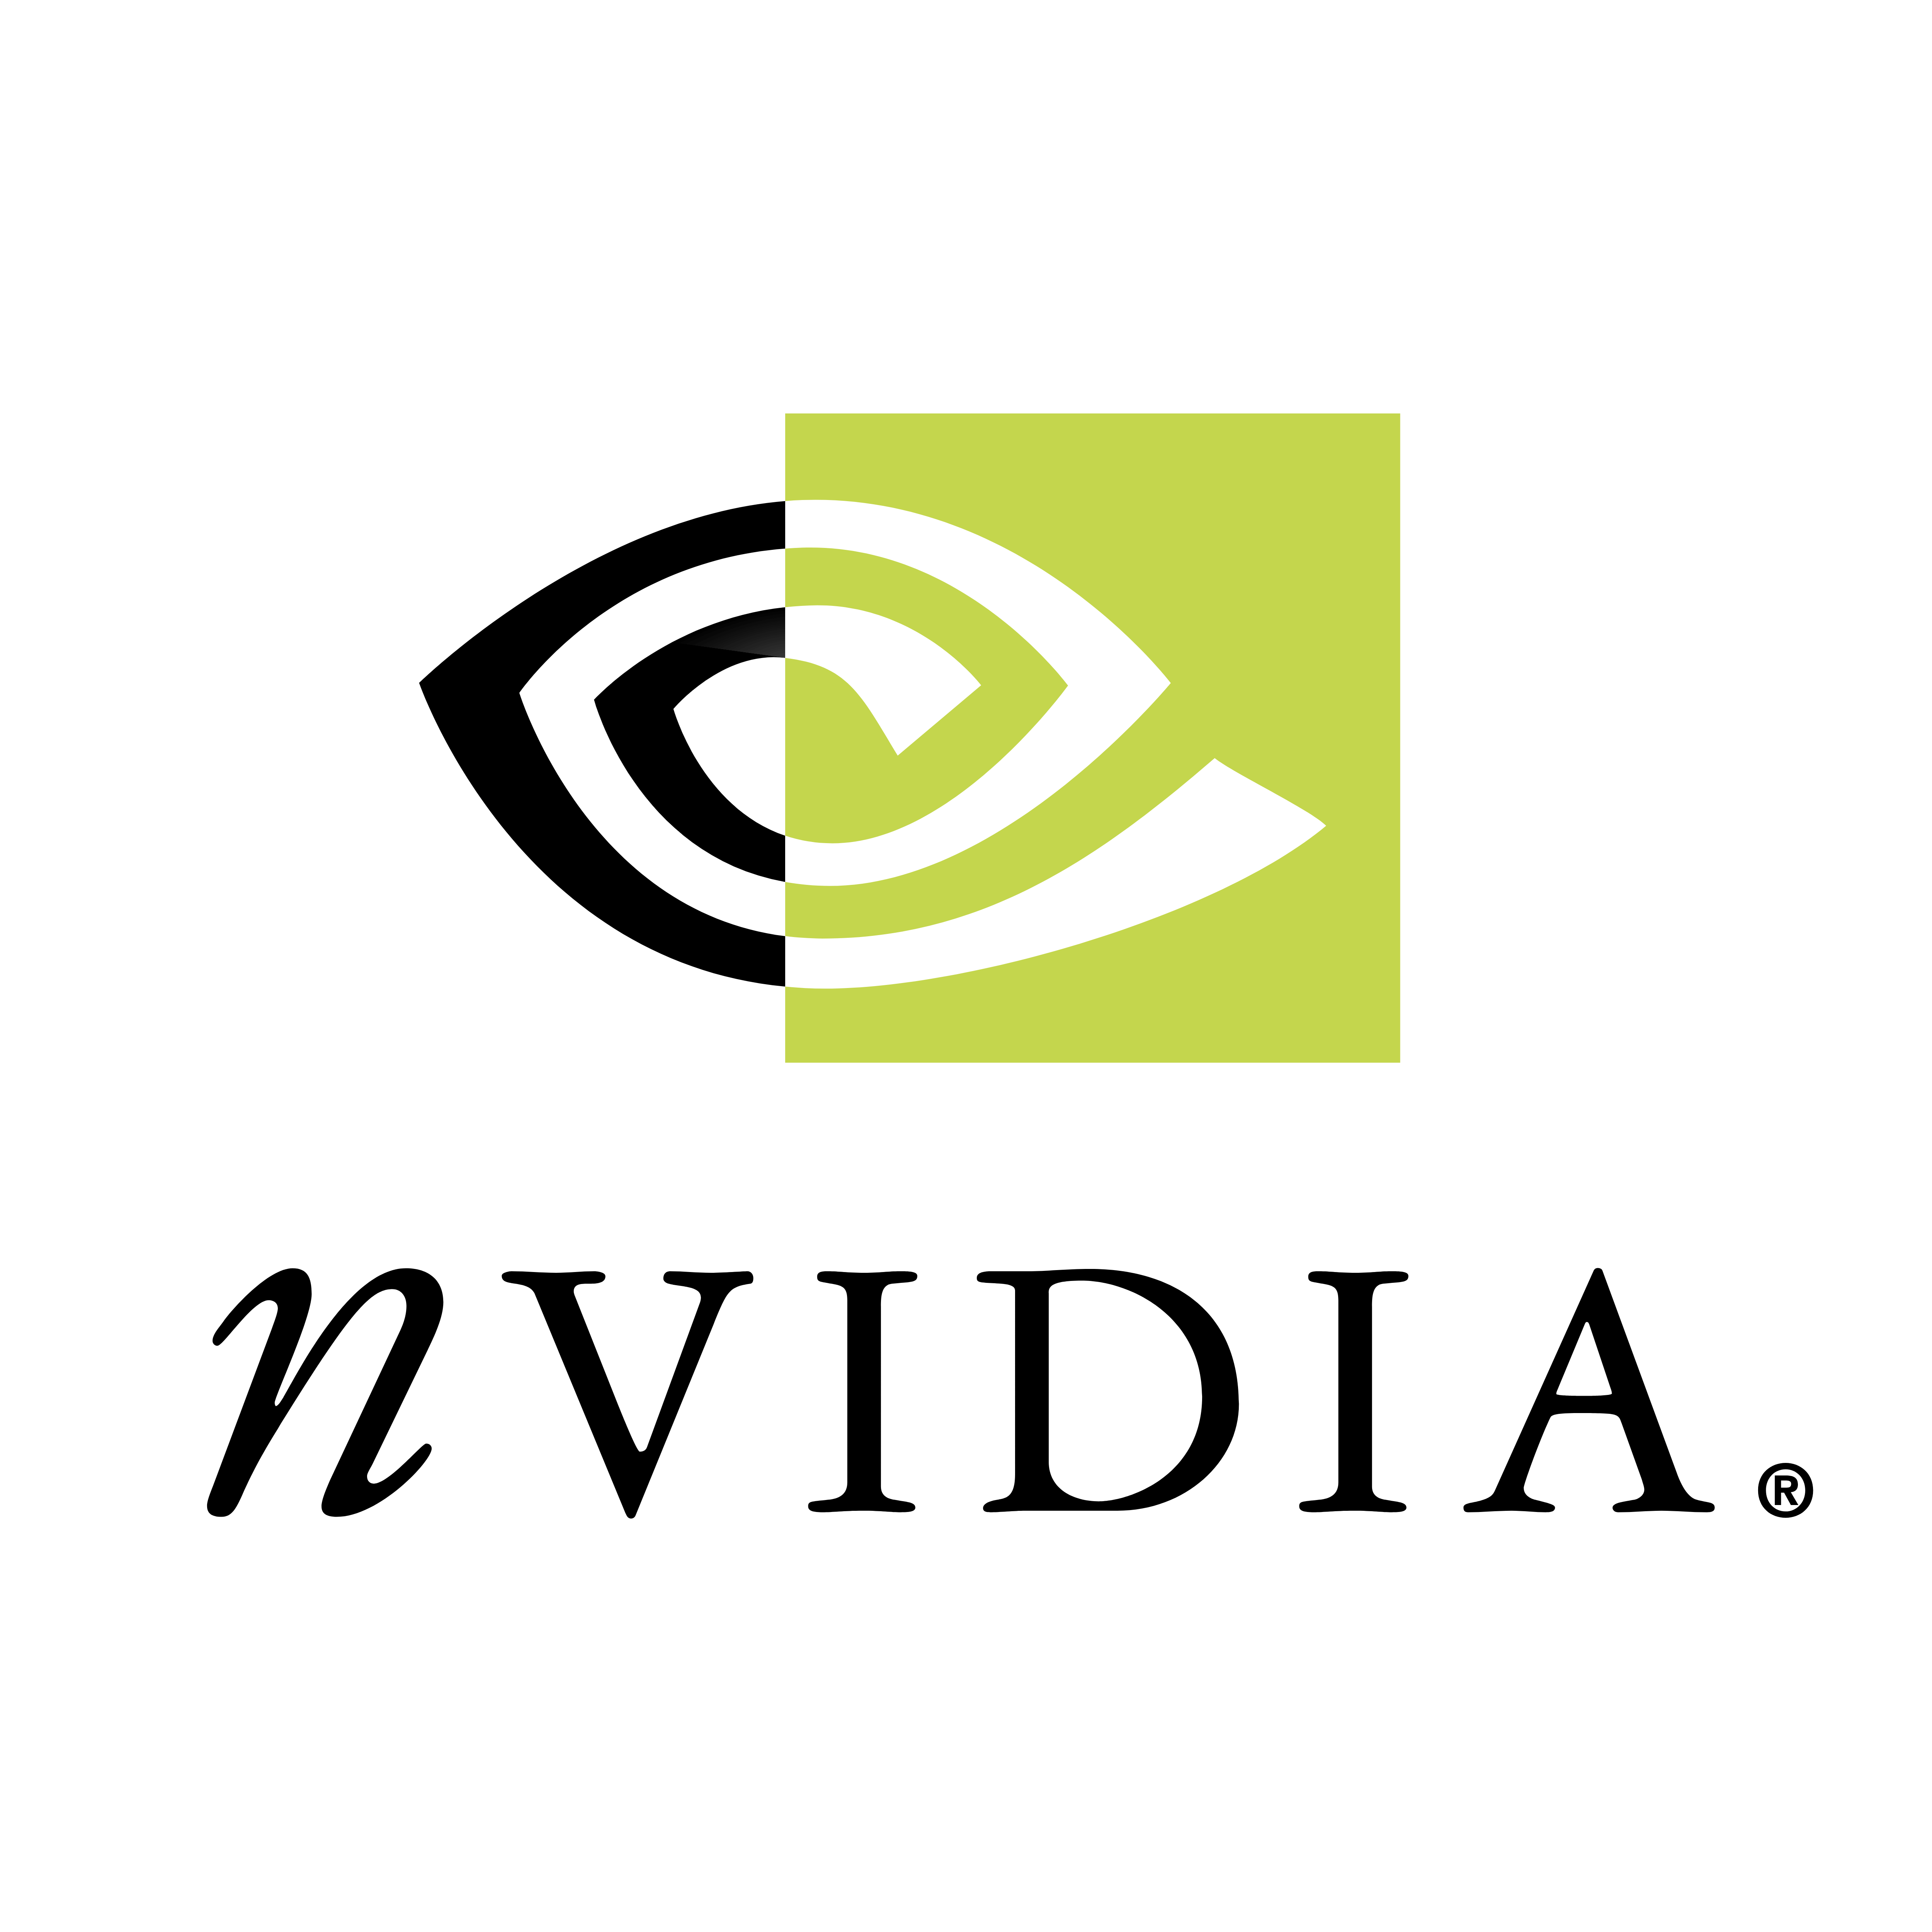 NVIDIA Logo - Nvidia – Logos Download